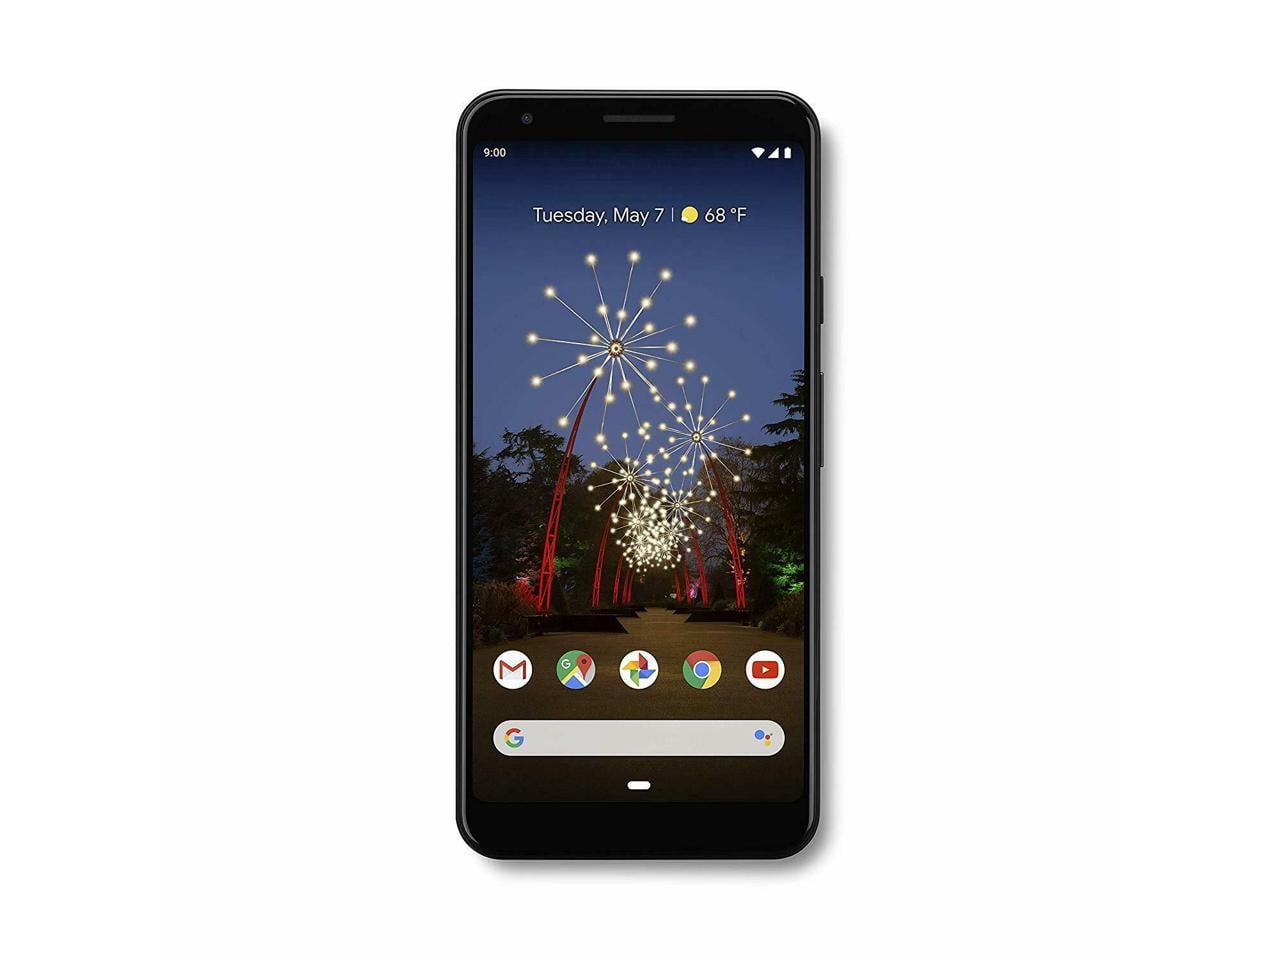 Google Pixel 3A XL 64GB Unlocked Black Color Single Sim Smartphone 